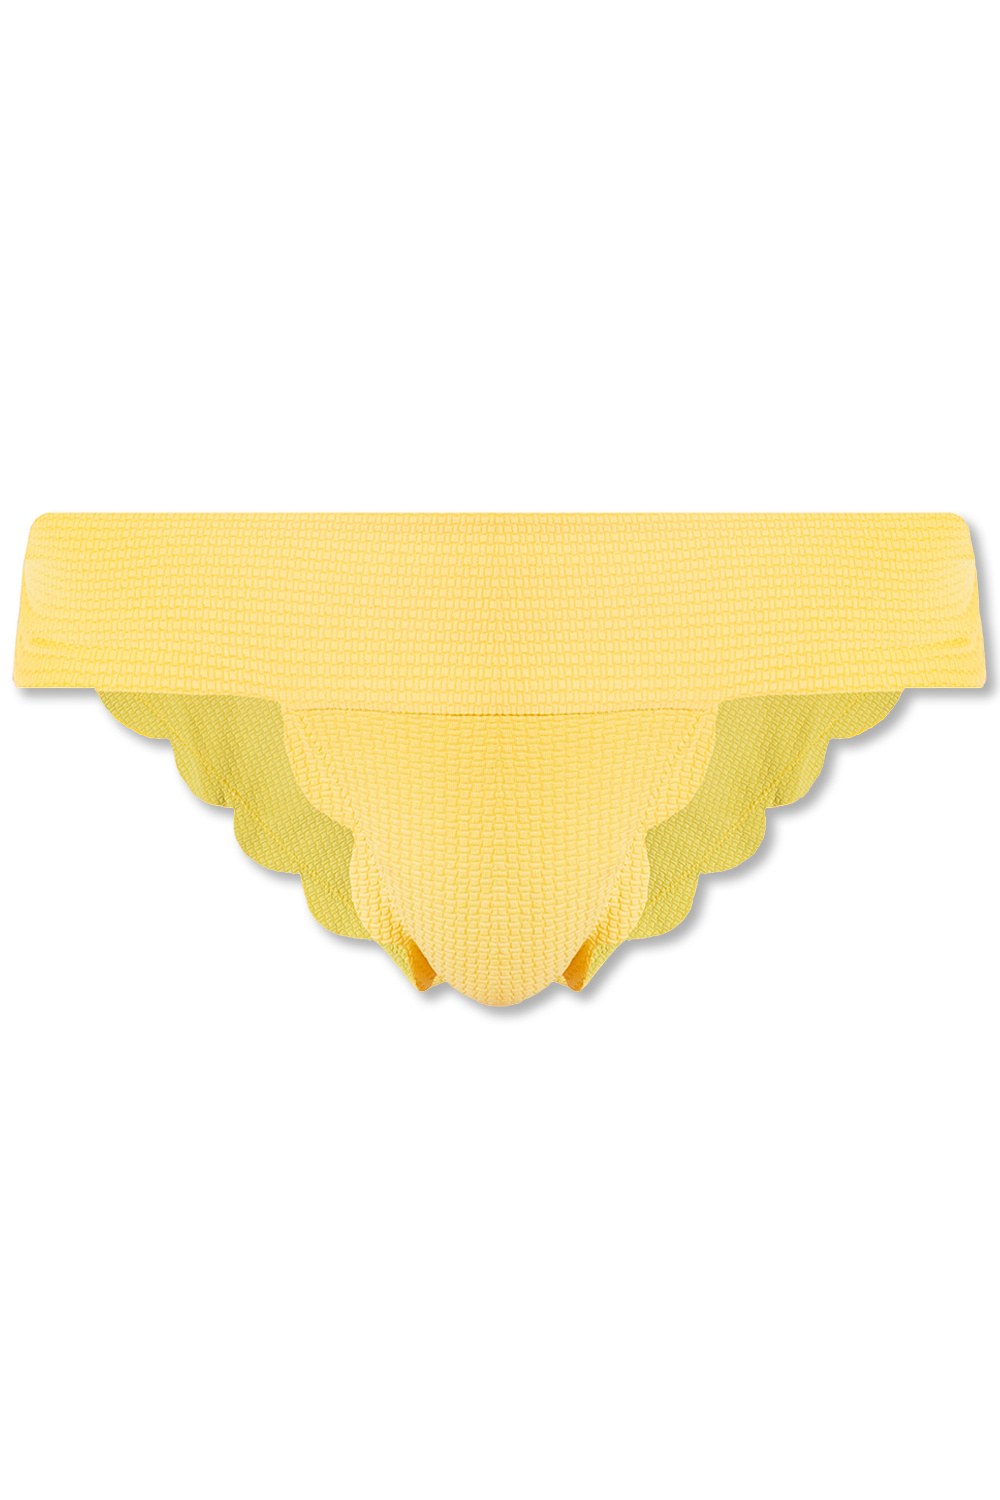 Marysia ‘Santa Clara’ reversible swimsuit bottom